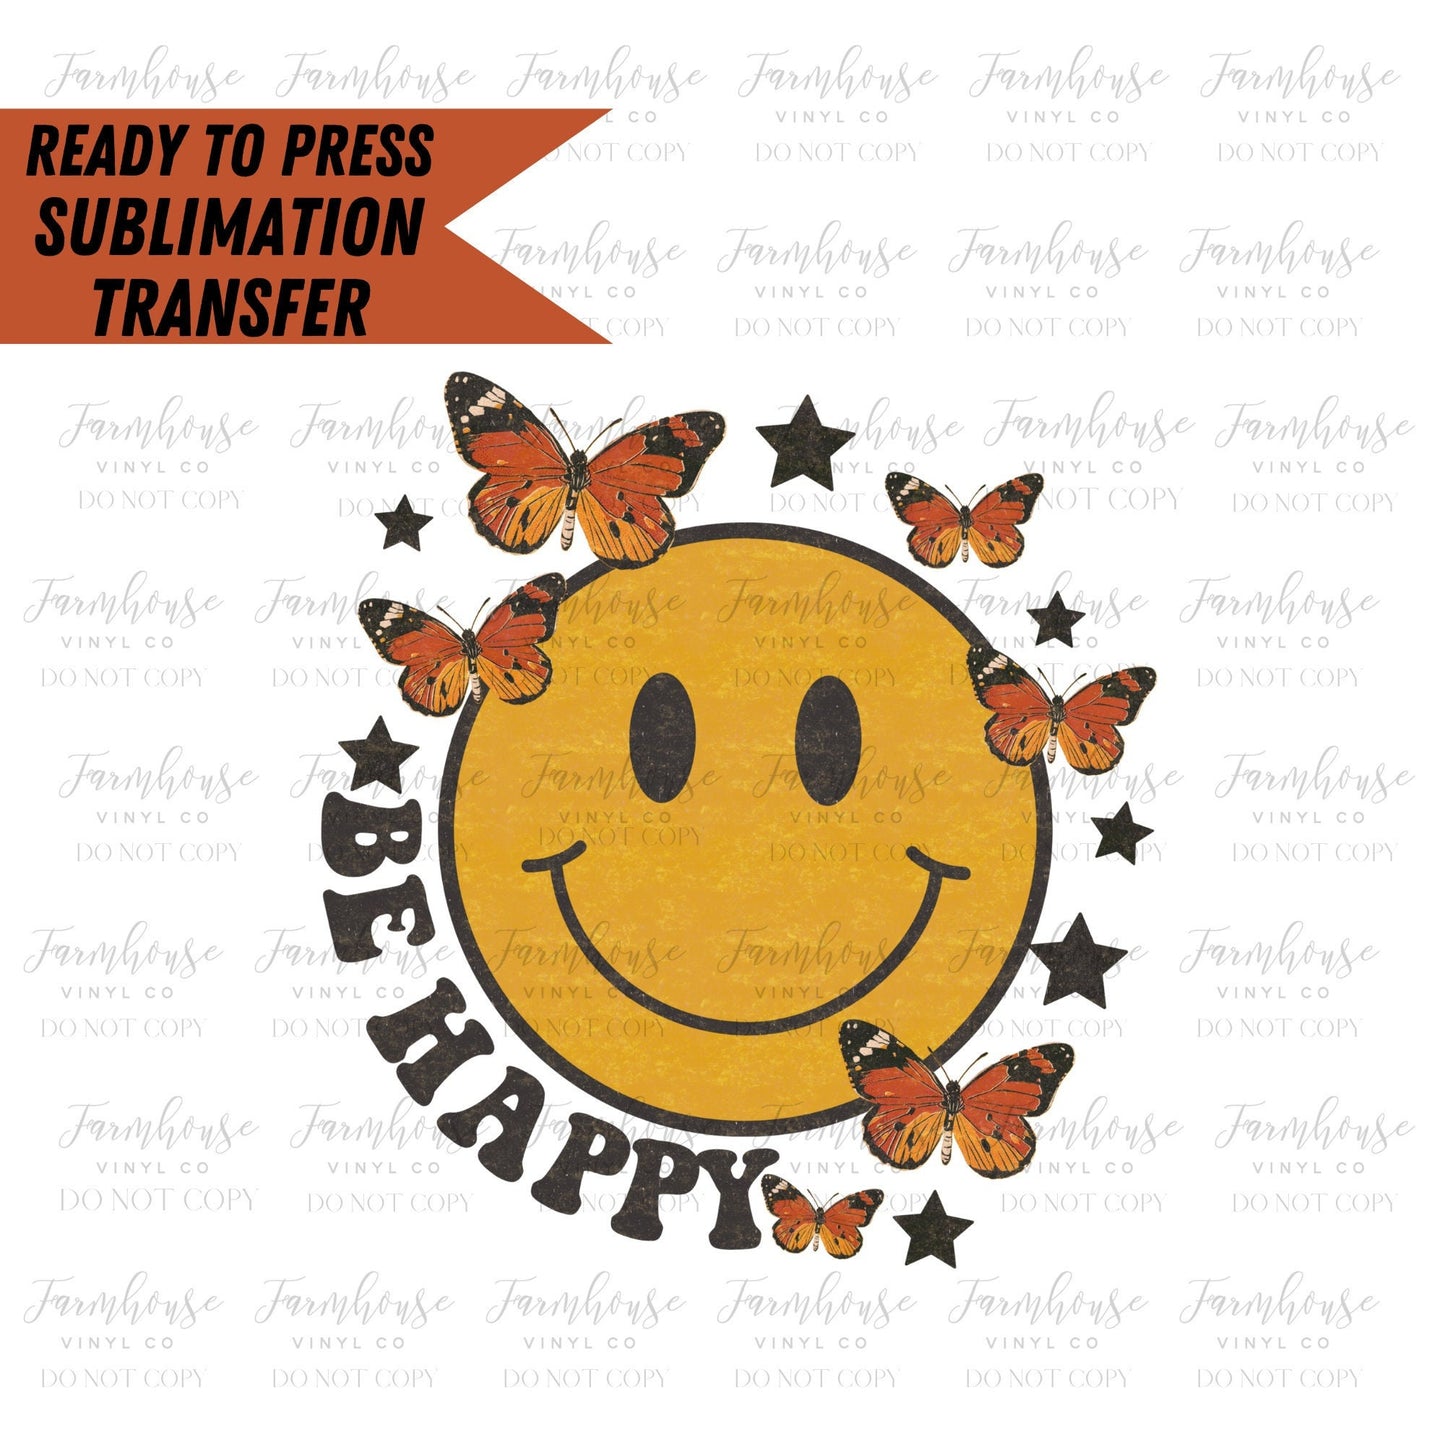 Retro Be Happy, Ready to Press Sublimation Transfer, Sublimation Transfers, Heat Transfer, Ready to Press, Butterflies BOHO Design - Farmhouse Vinyl Co